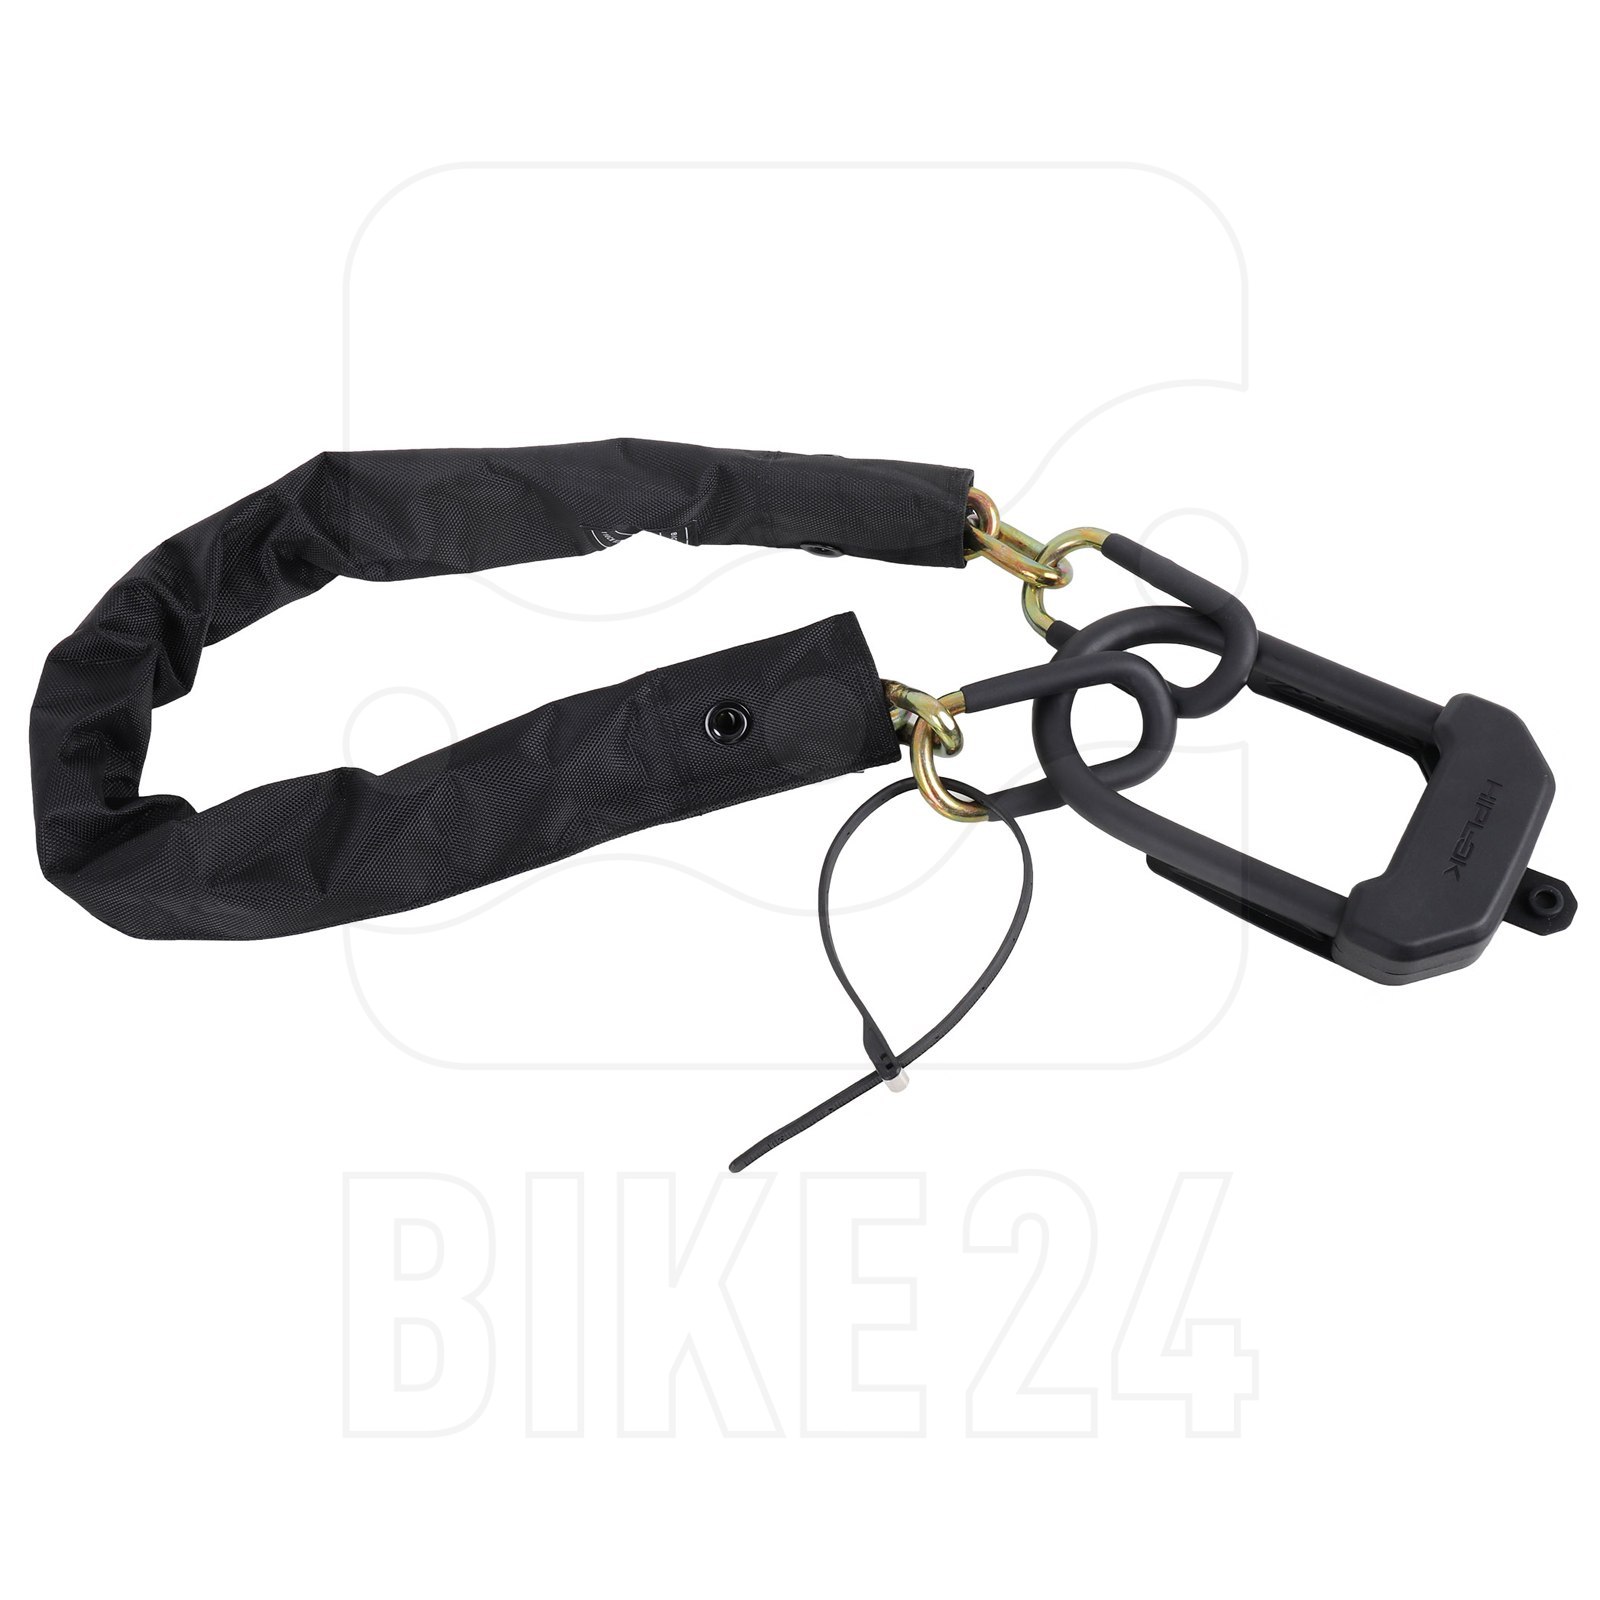 Produktbild von Hiplok E-DX Fahrradschloss-Set für E-Bikes - all black